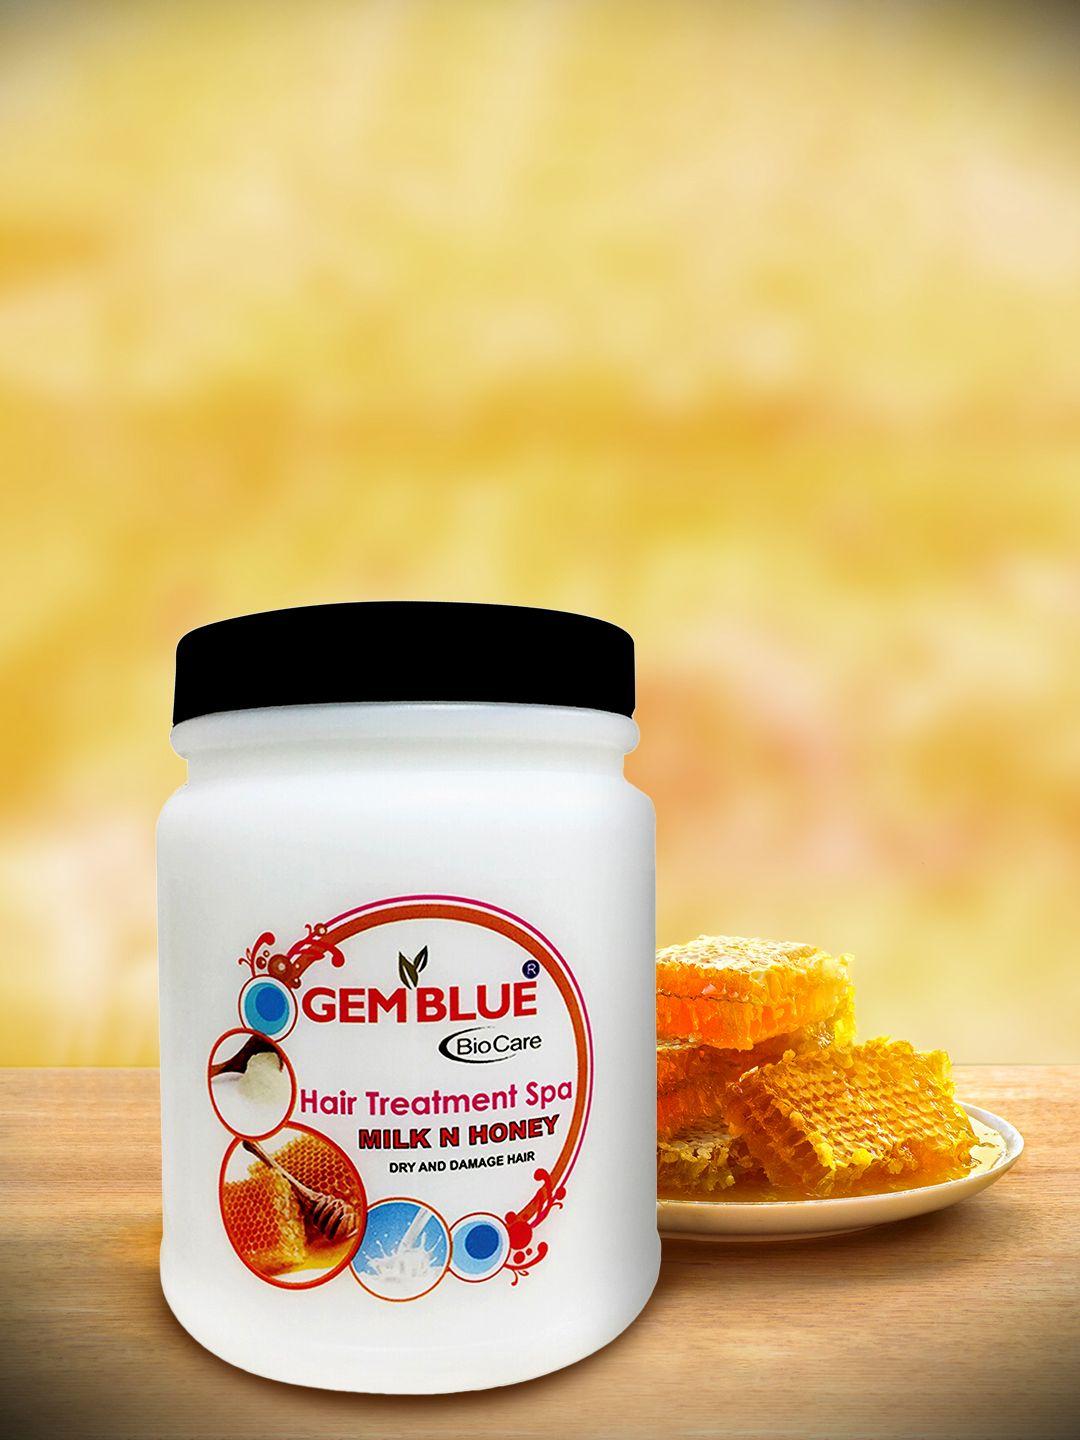 gemblue biocare milk & honey hair treatment spa - 1000 g